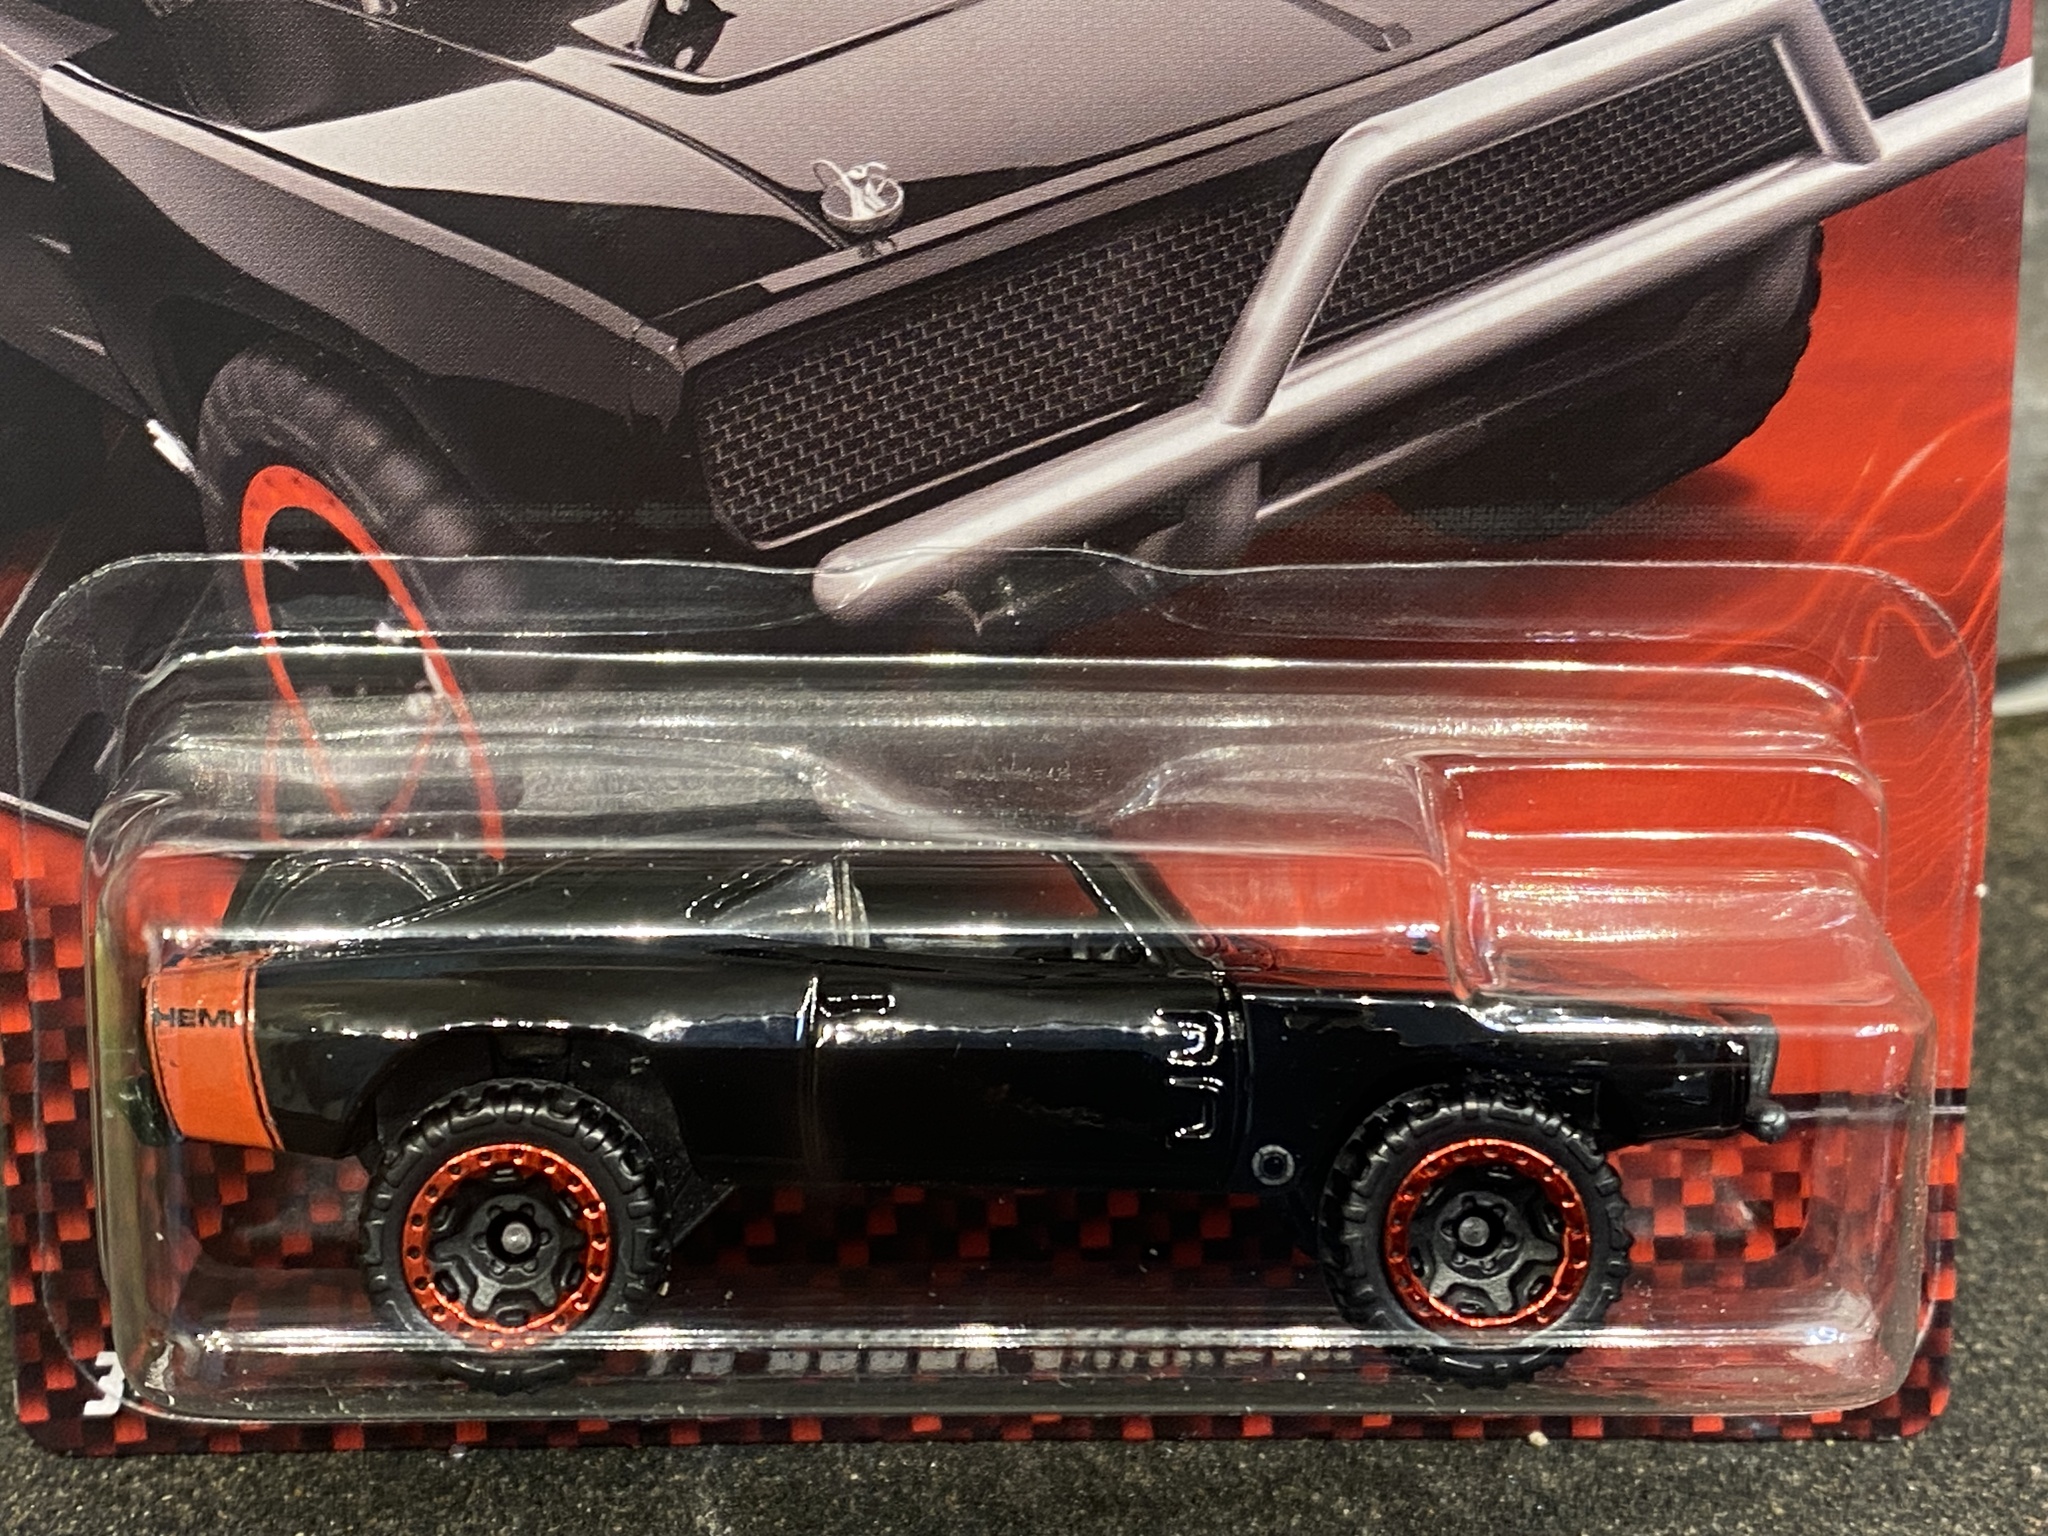 Skala 1/64 Hot Wheels "Fast & Furious" - Dodge Charger 70